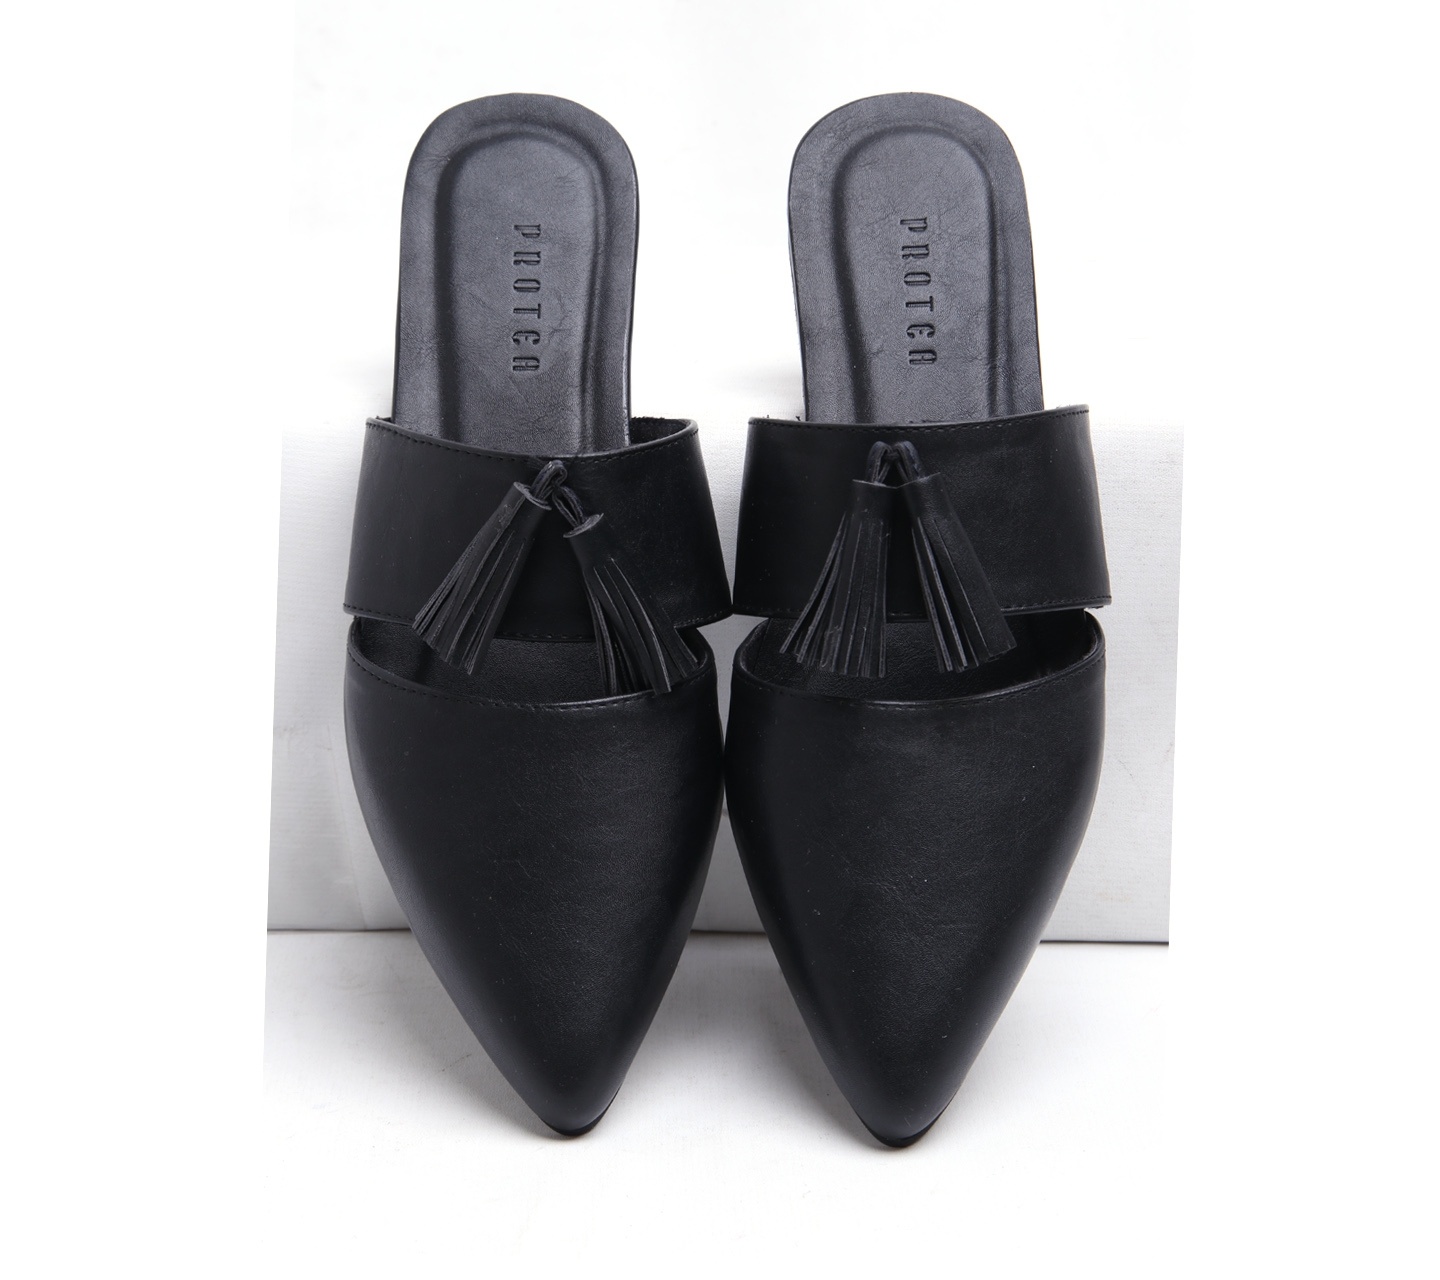 Protea Black Mules Sandals